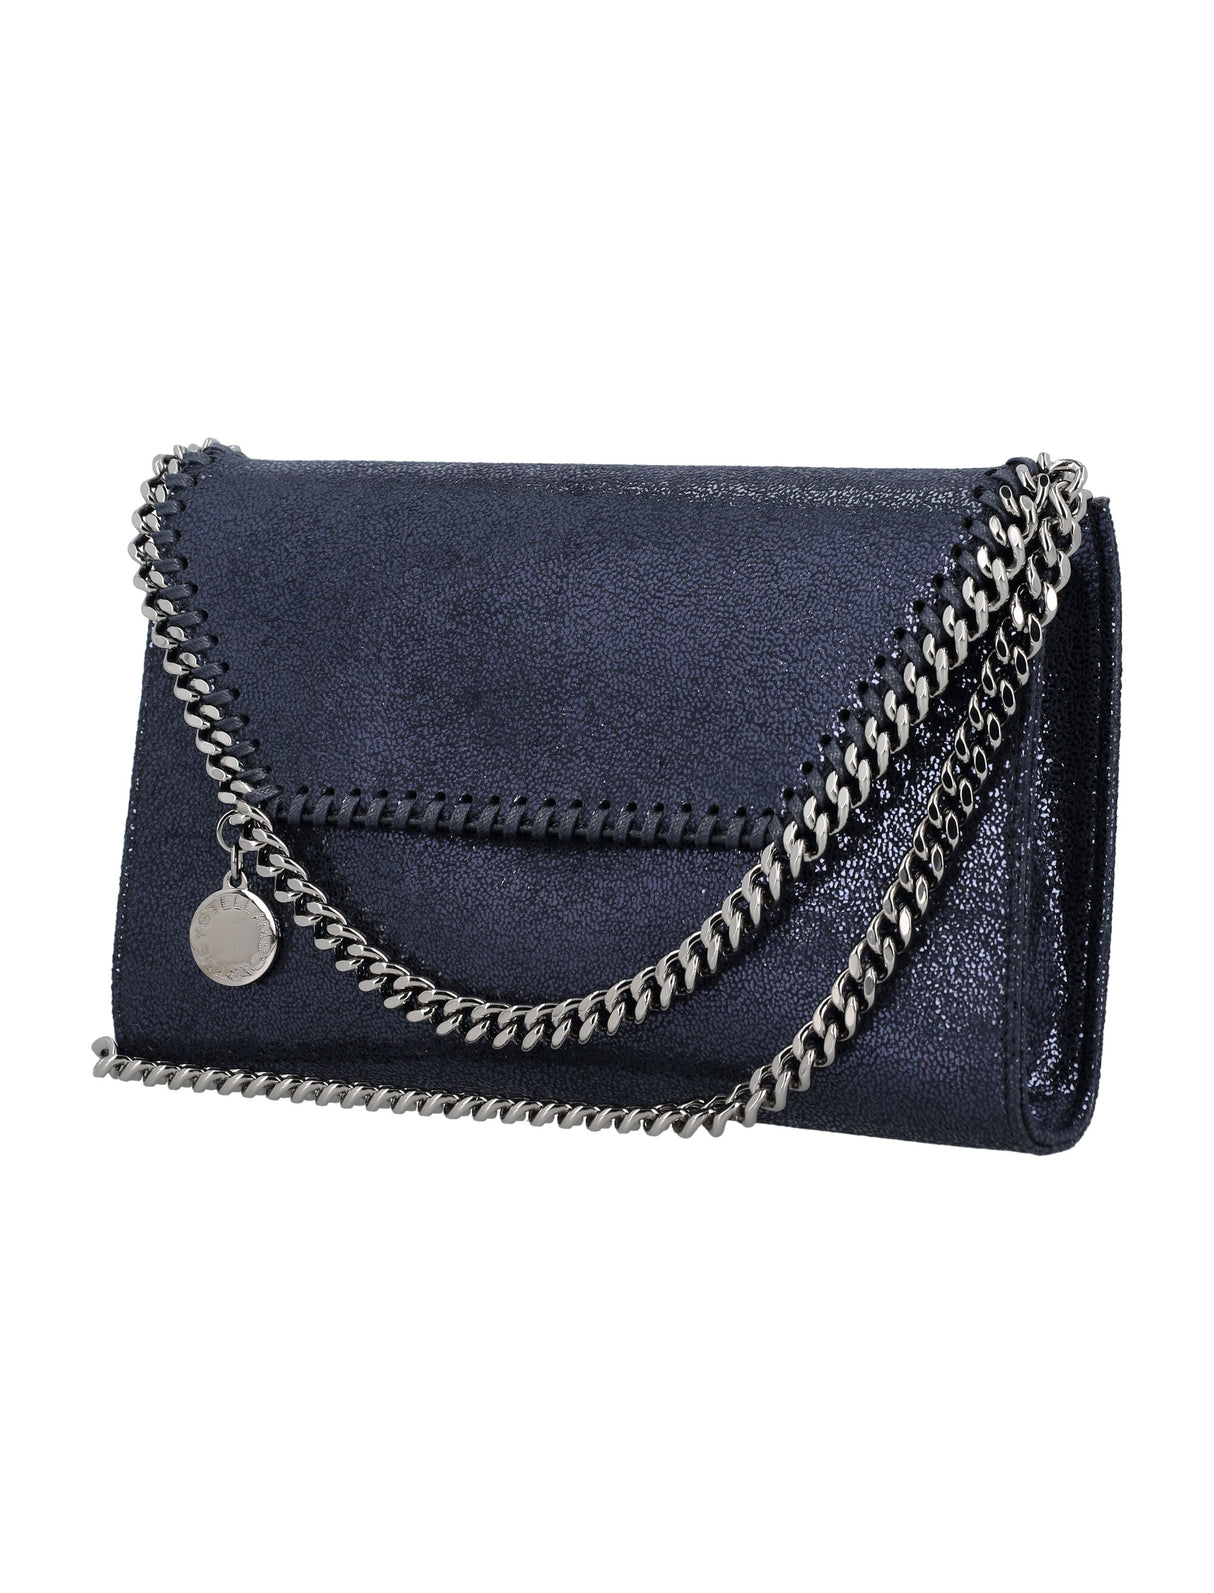 STELLA MCCARTNEY Mini Falabella Flap Shiny Handbag with Brass Chain Strap - Black, 14x23x3 cm